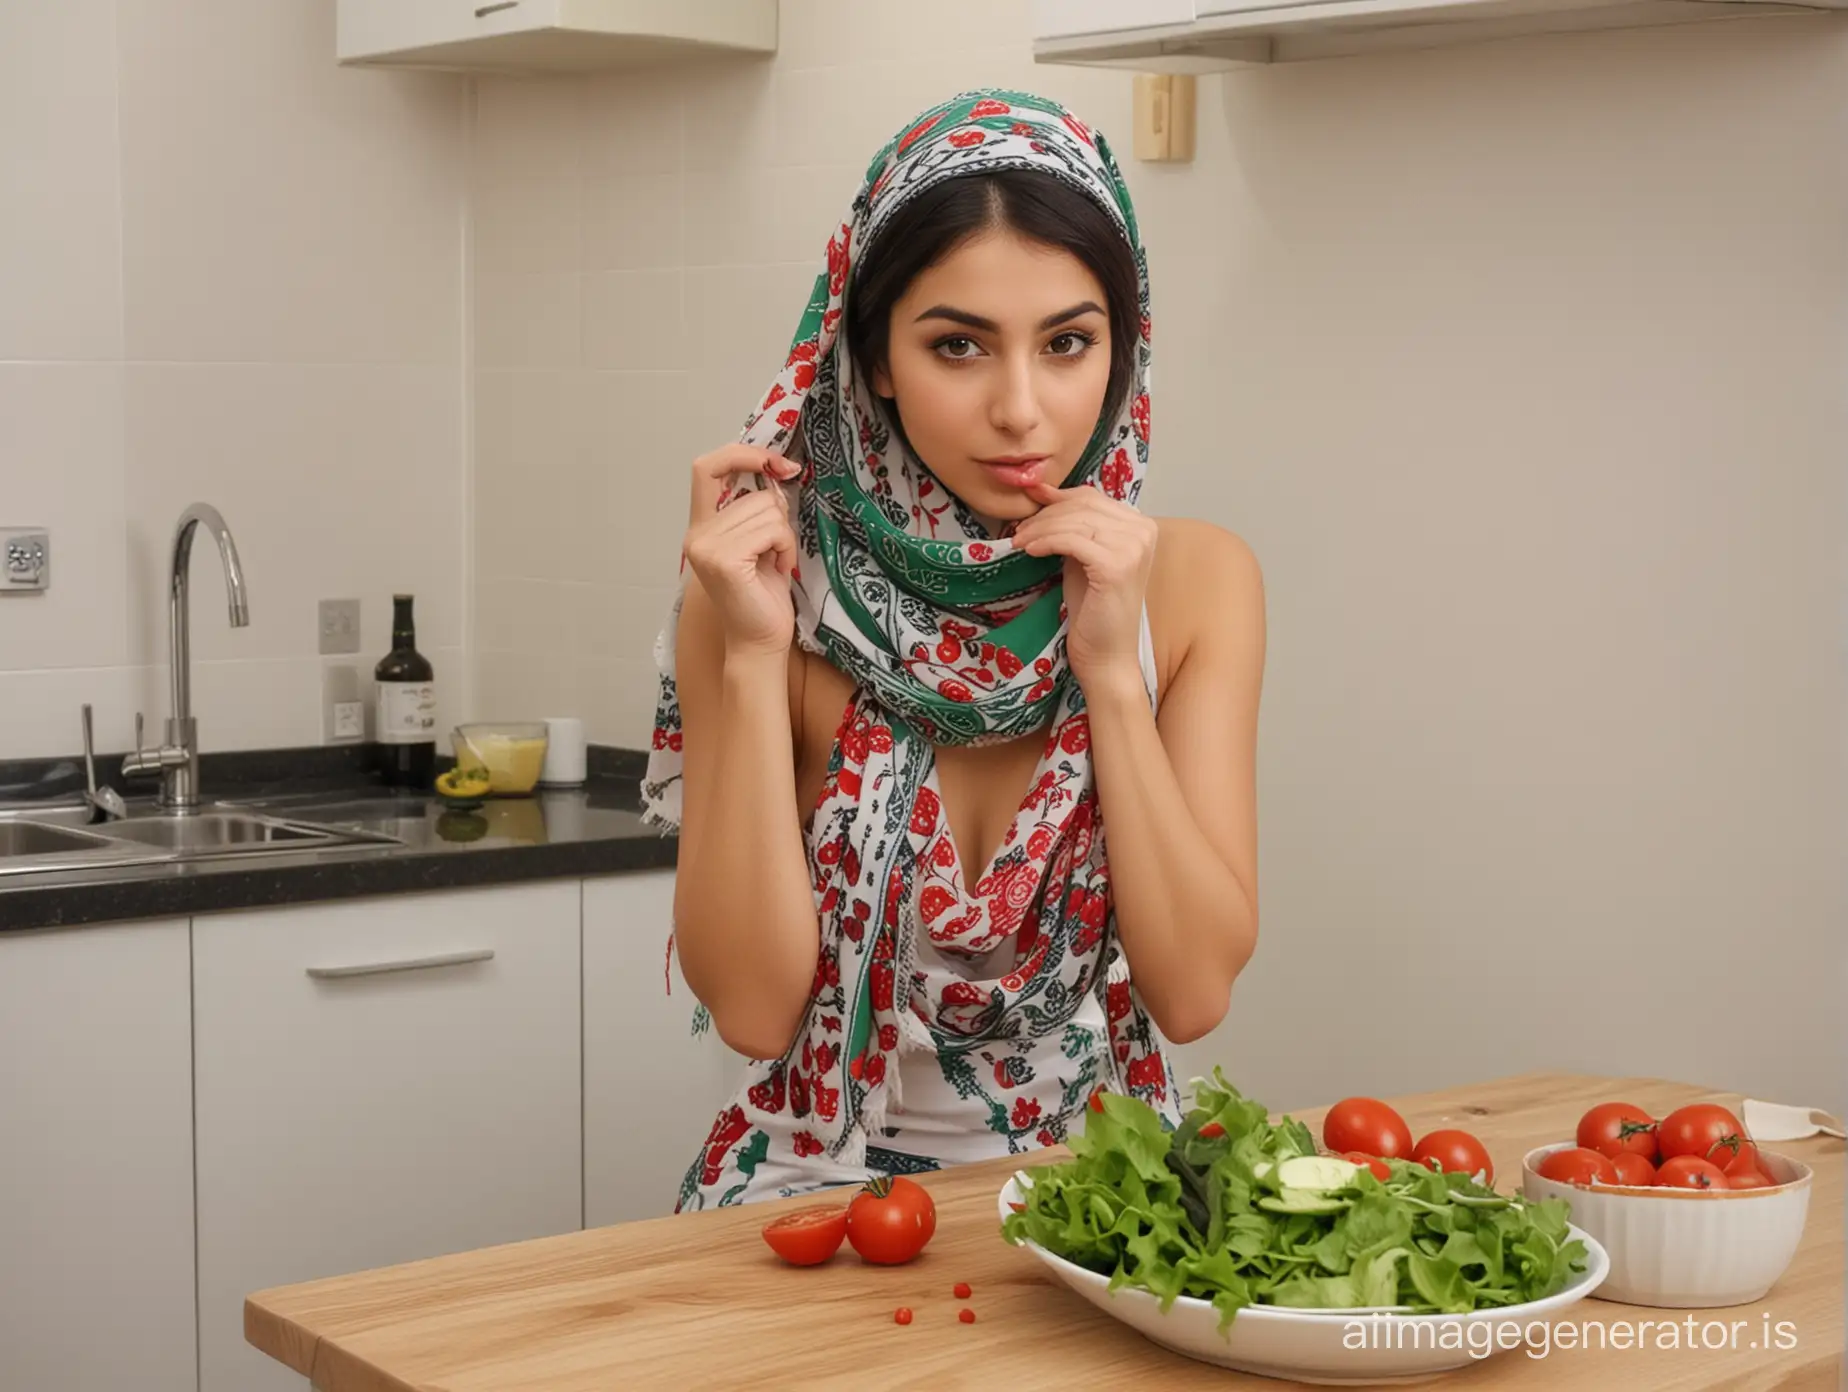 Attractive-Iranian-Woman-Enjoying-Salad-in-Stylish-Kitchen-Scene